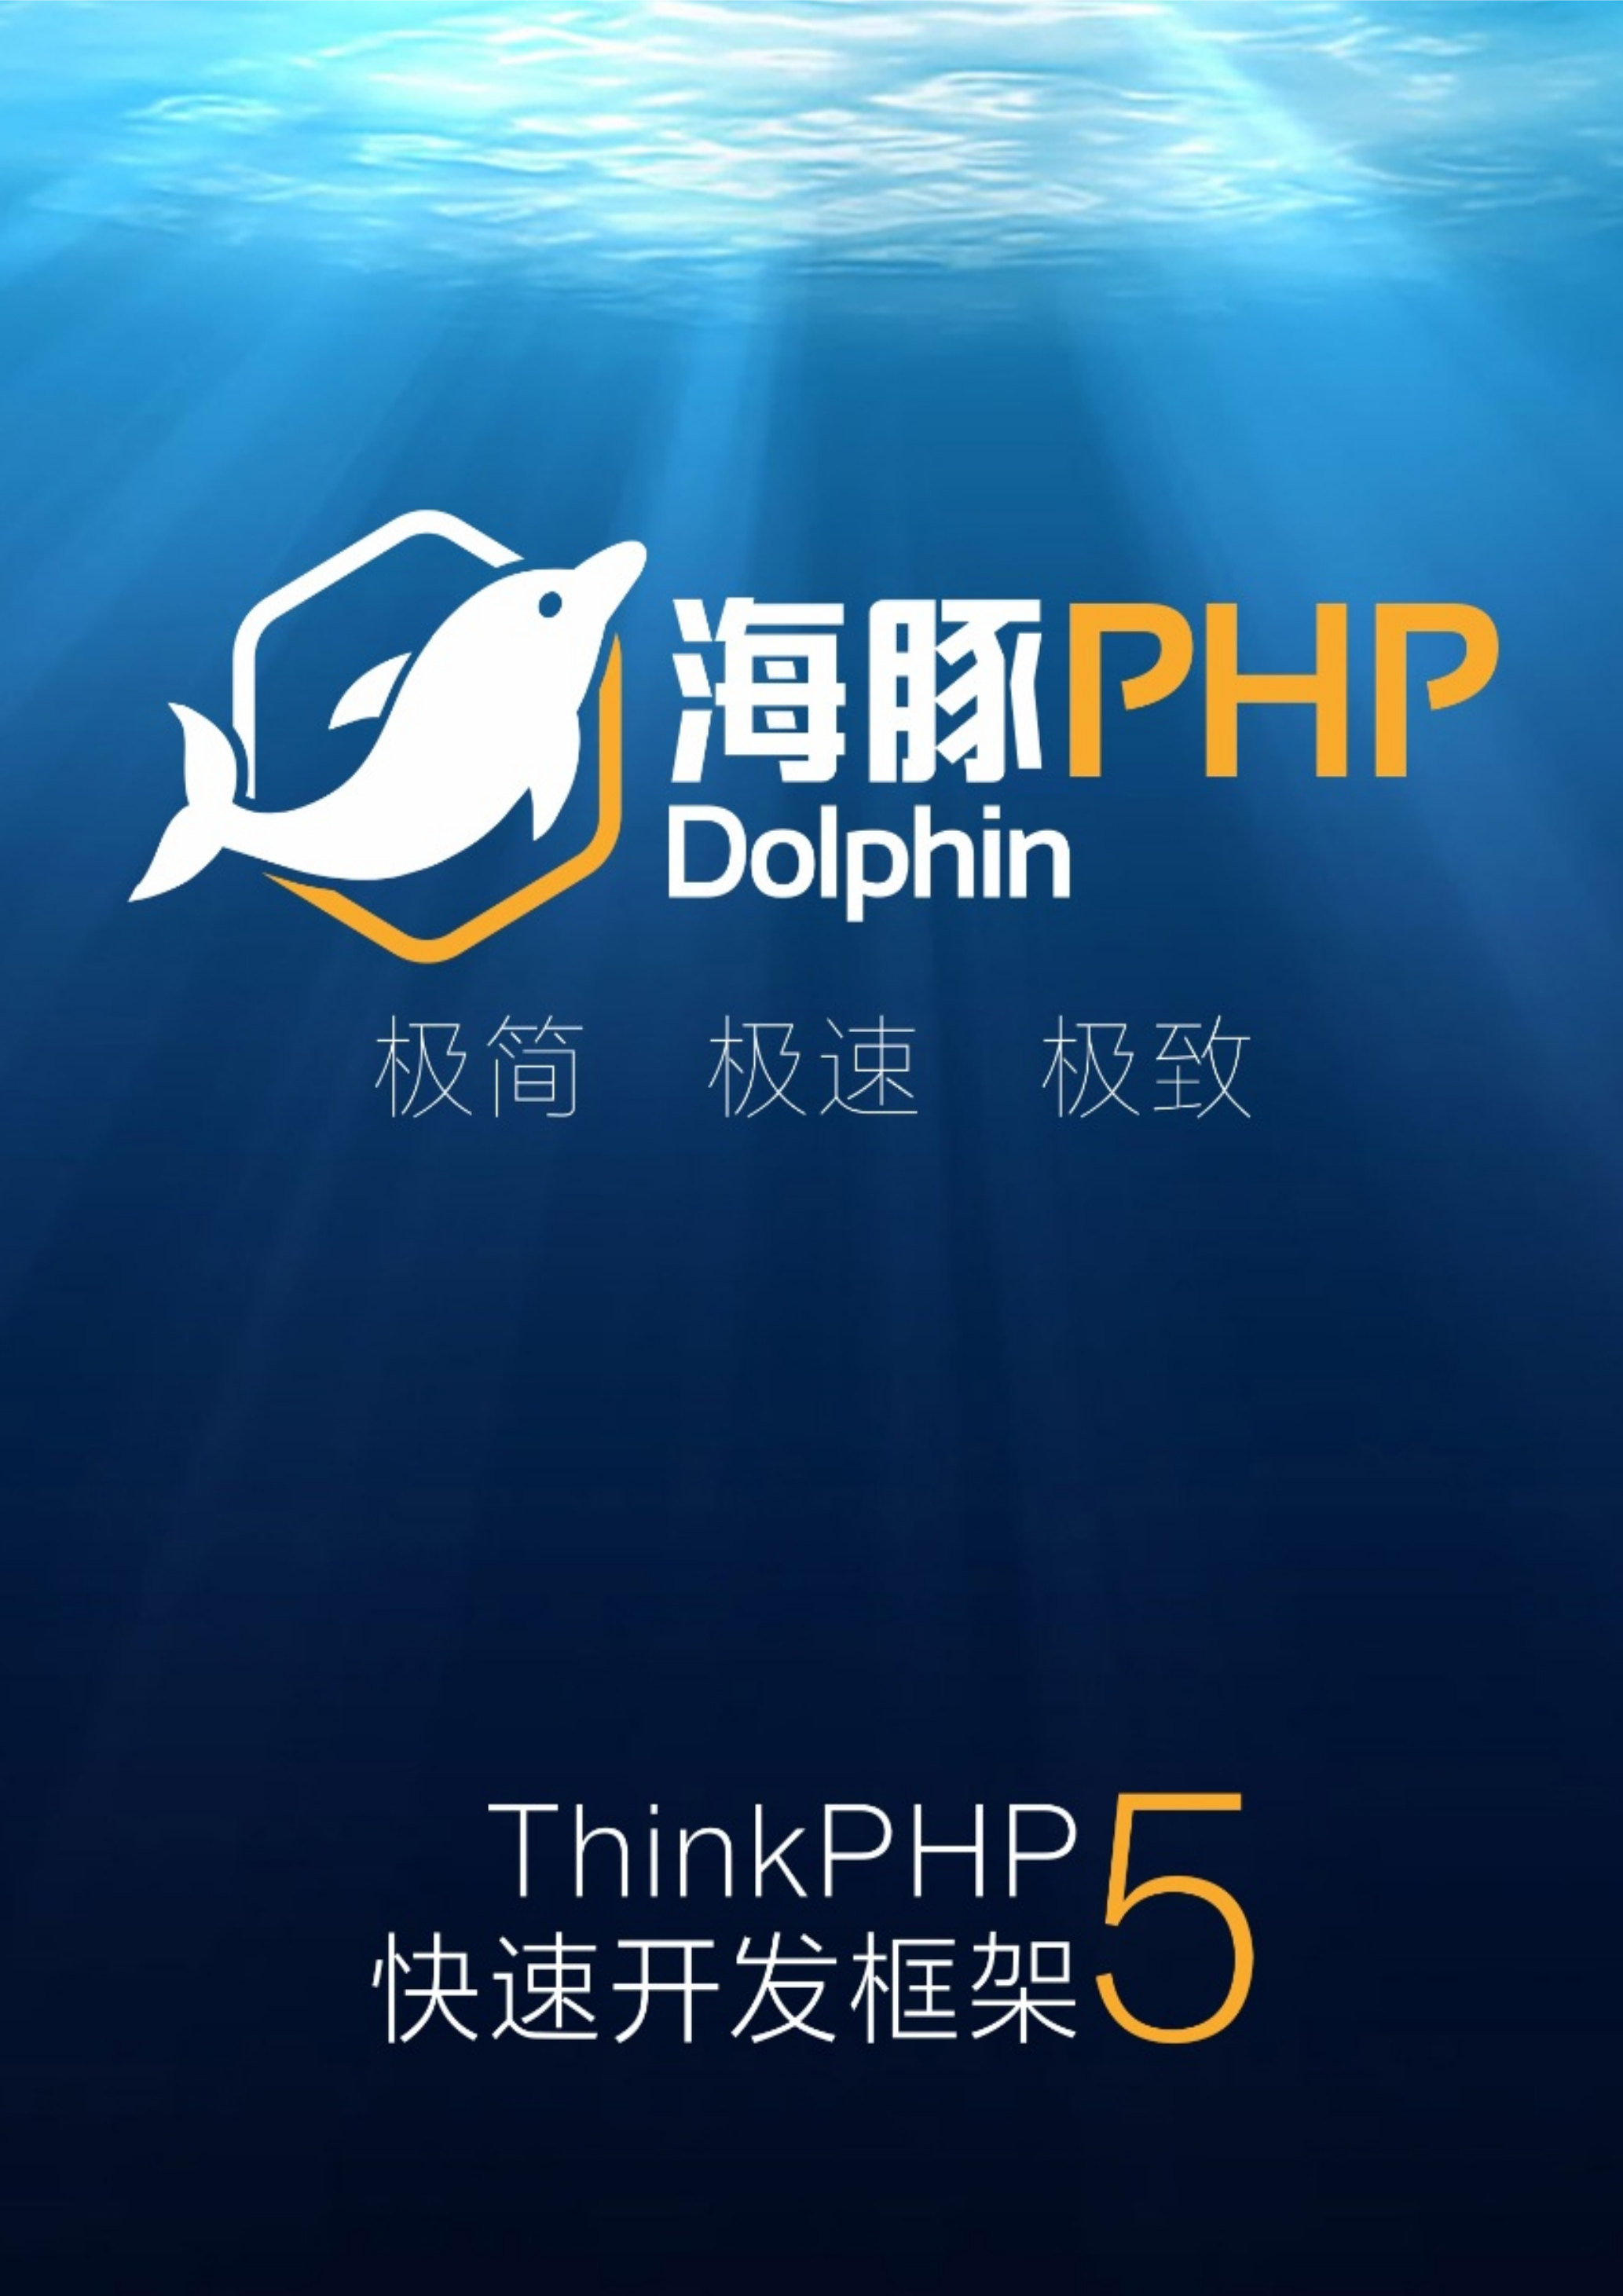 DolphinPHP1.3.0完全开发手册-基于ThinkPHP5.0.20的快速开发框架-05221135 封面